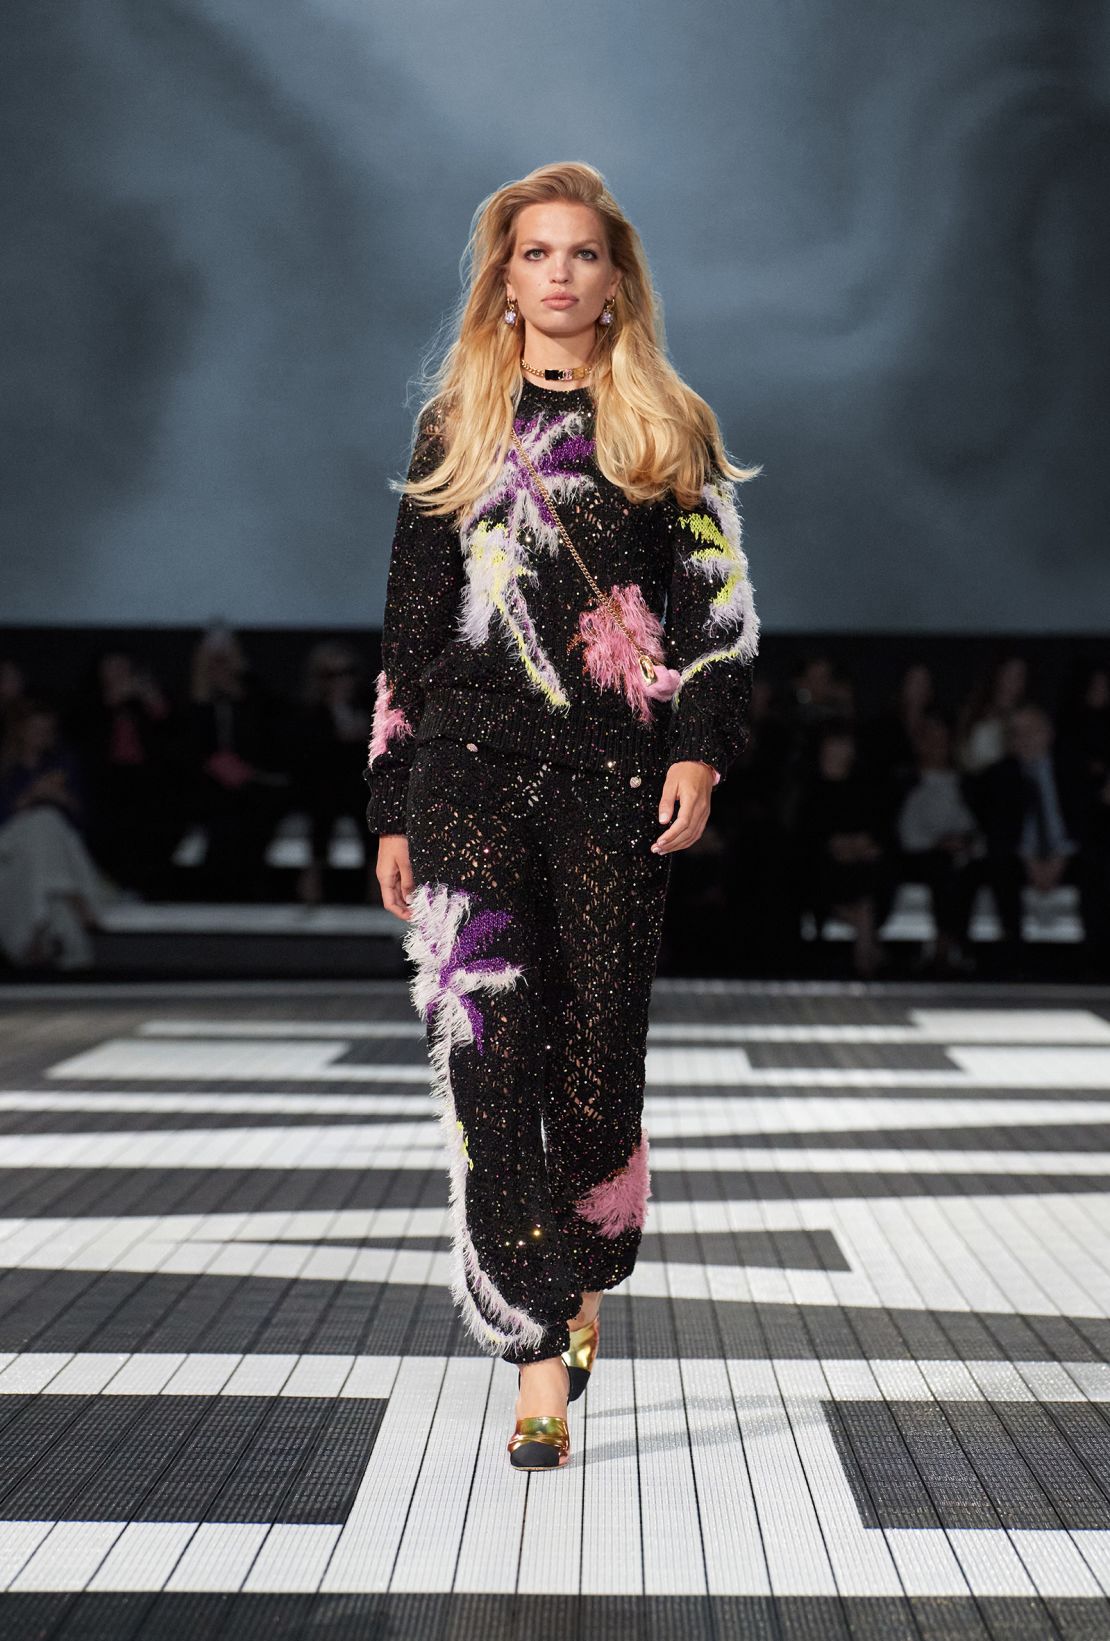 Alma Jodorowsky attends the Chanel Womenswear Spring/Summer 2022